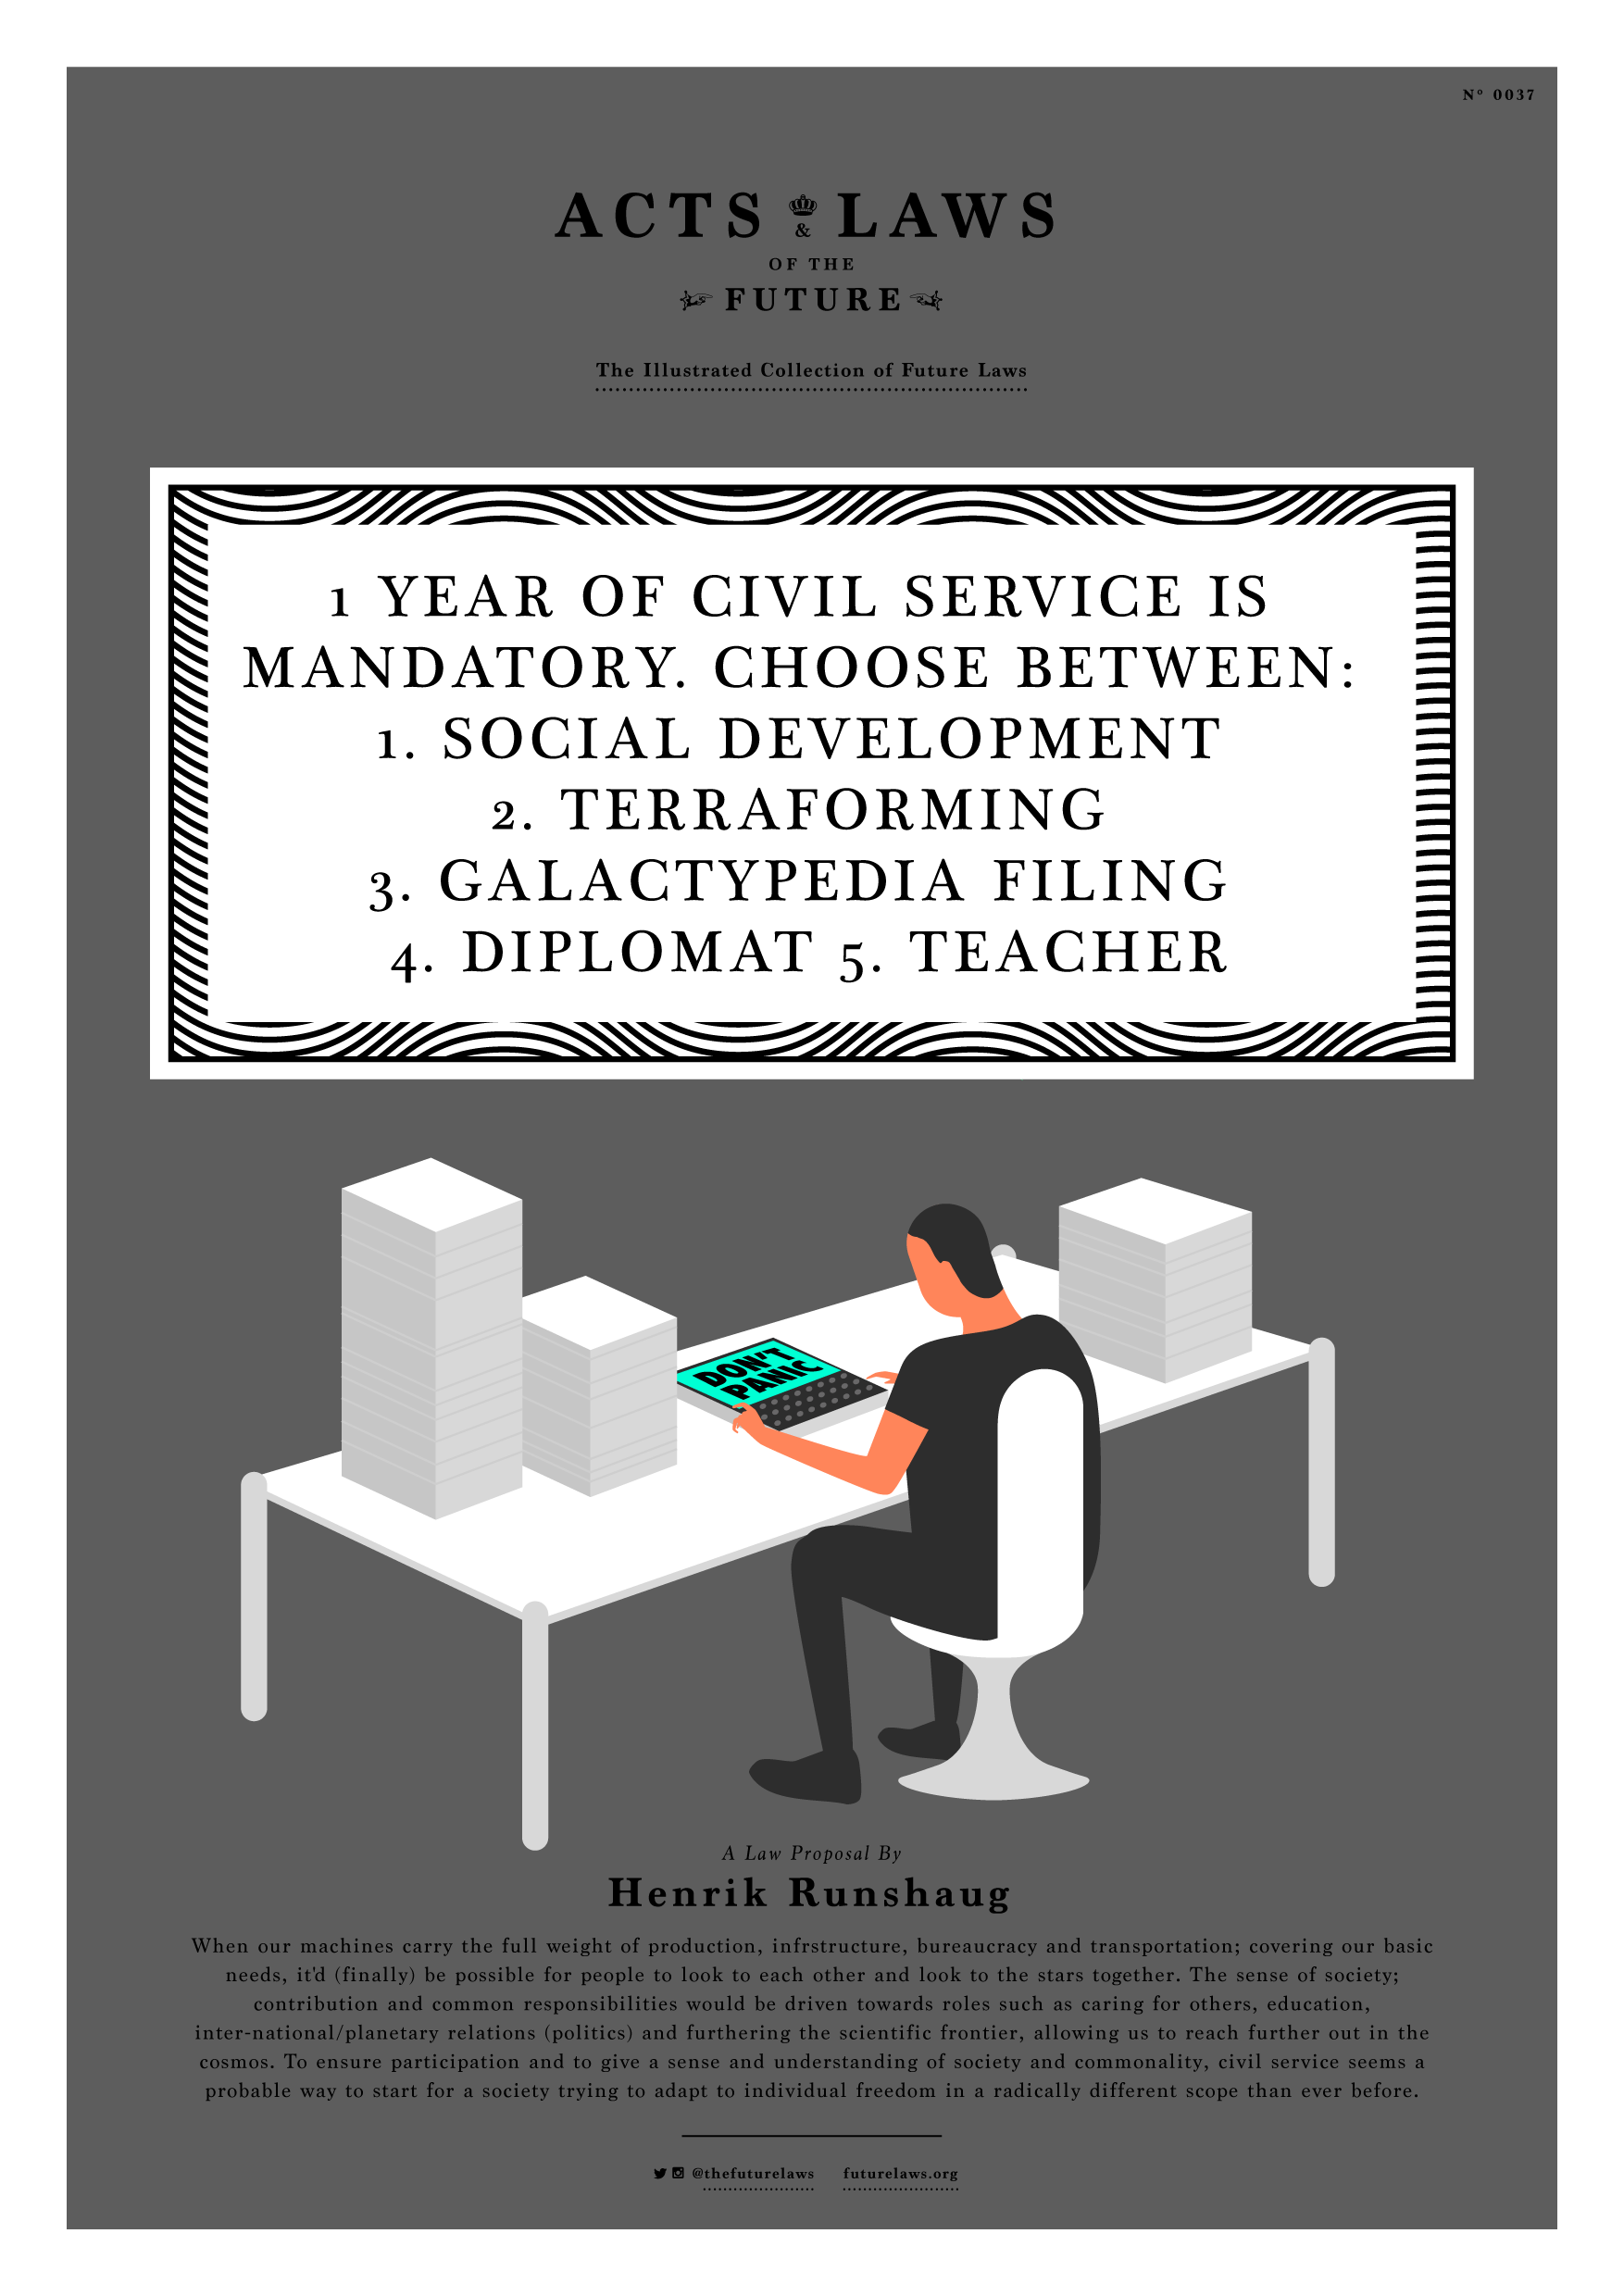 1 year of civil service is mandatory. Choose between: 1. Social development 2. Terraforming 3. Galactypedia filing 4. Diplomat 5. Teacher